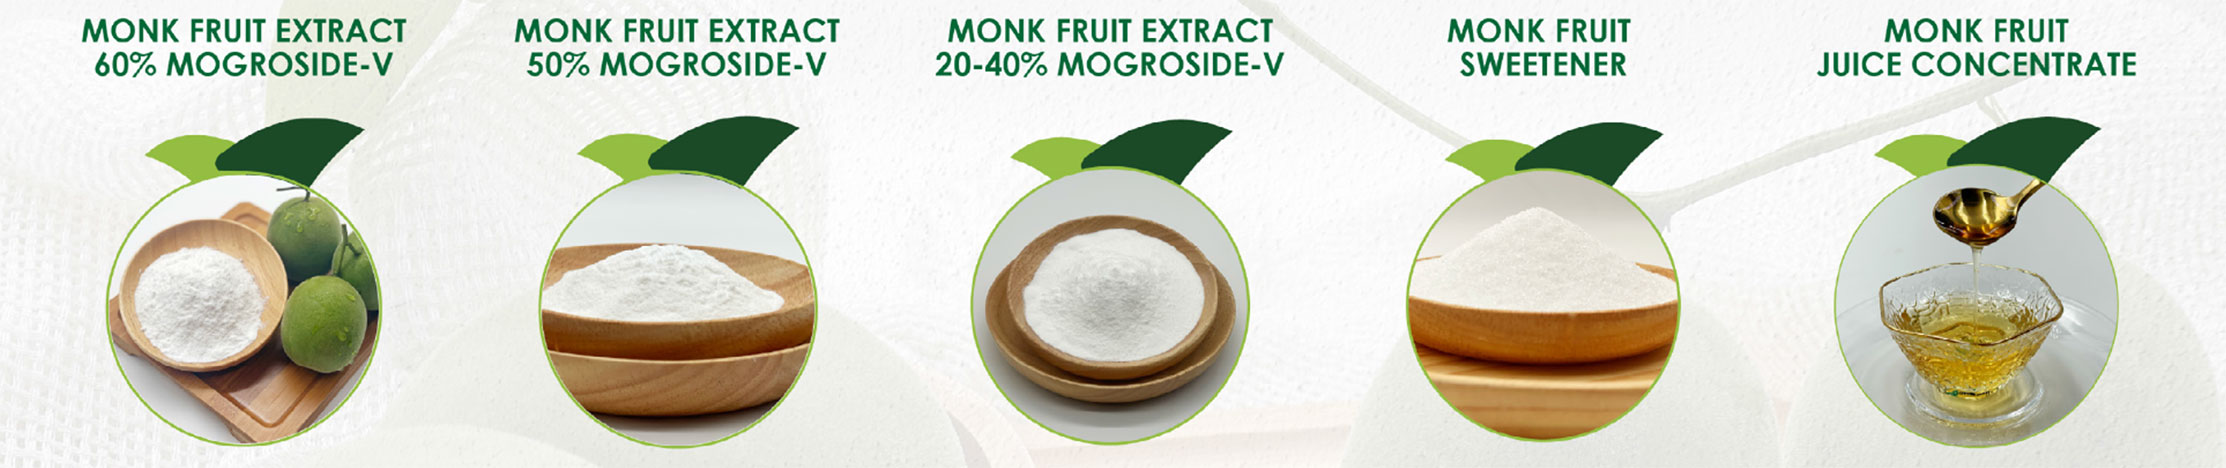 Monk-Fruit-Infographic